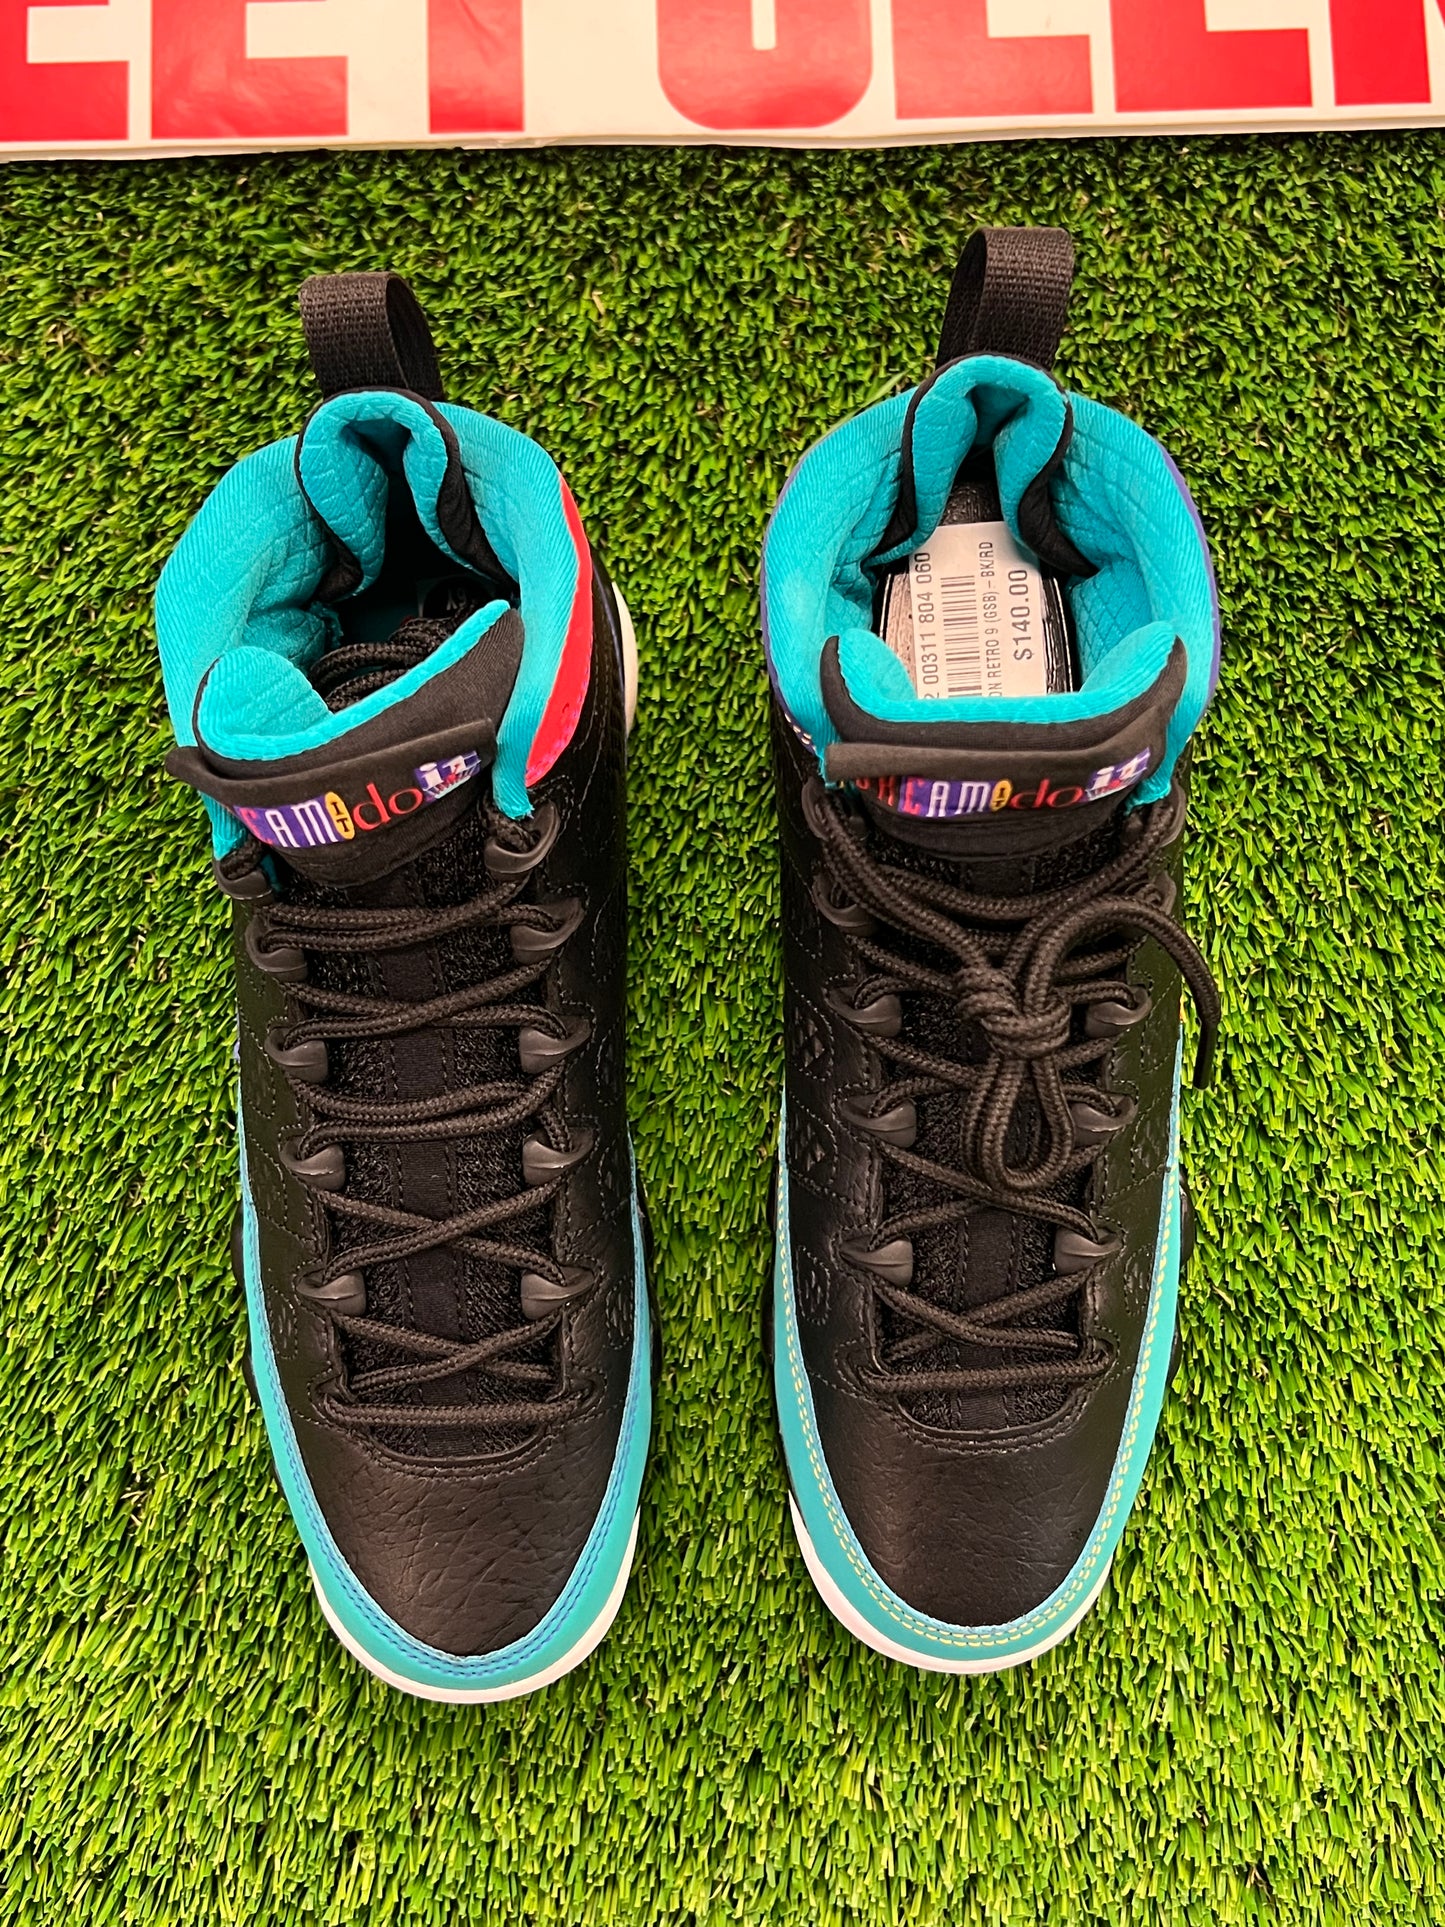 Air Jordan 9 Dream It Brand New Shoes